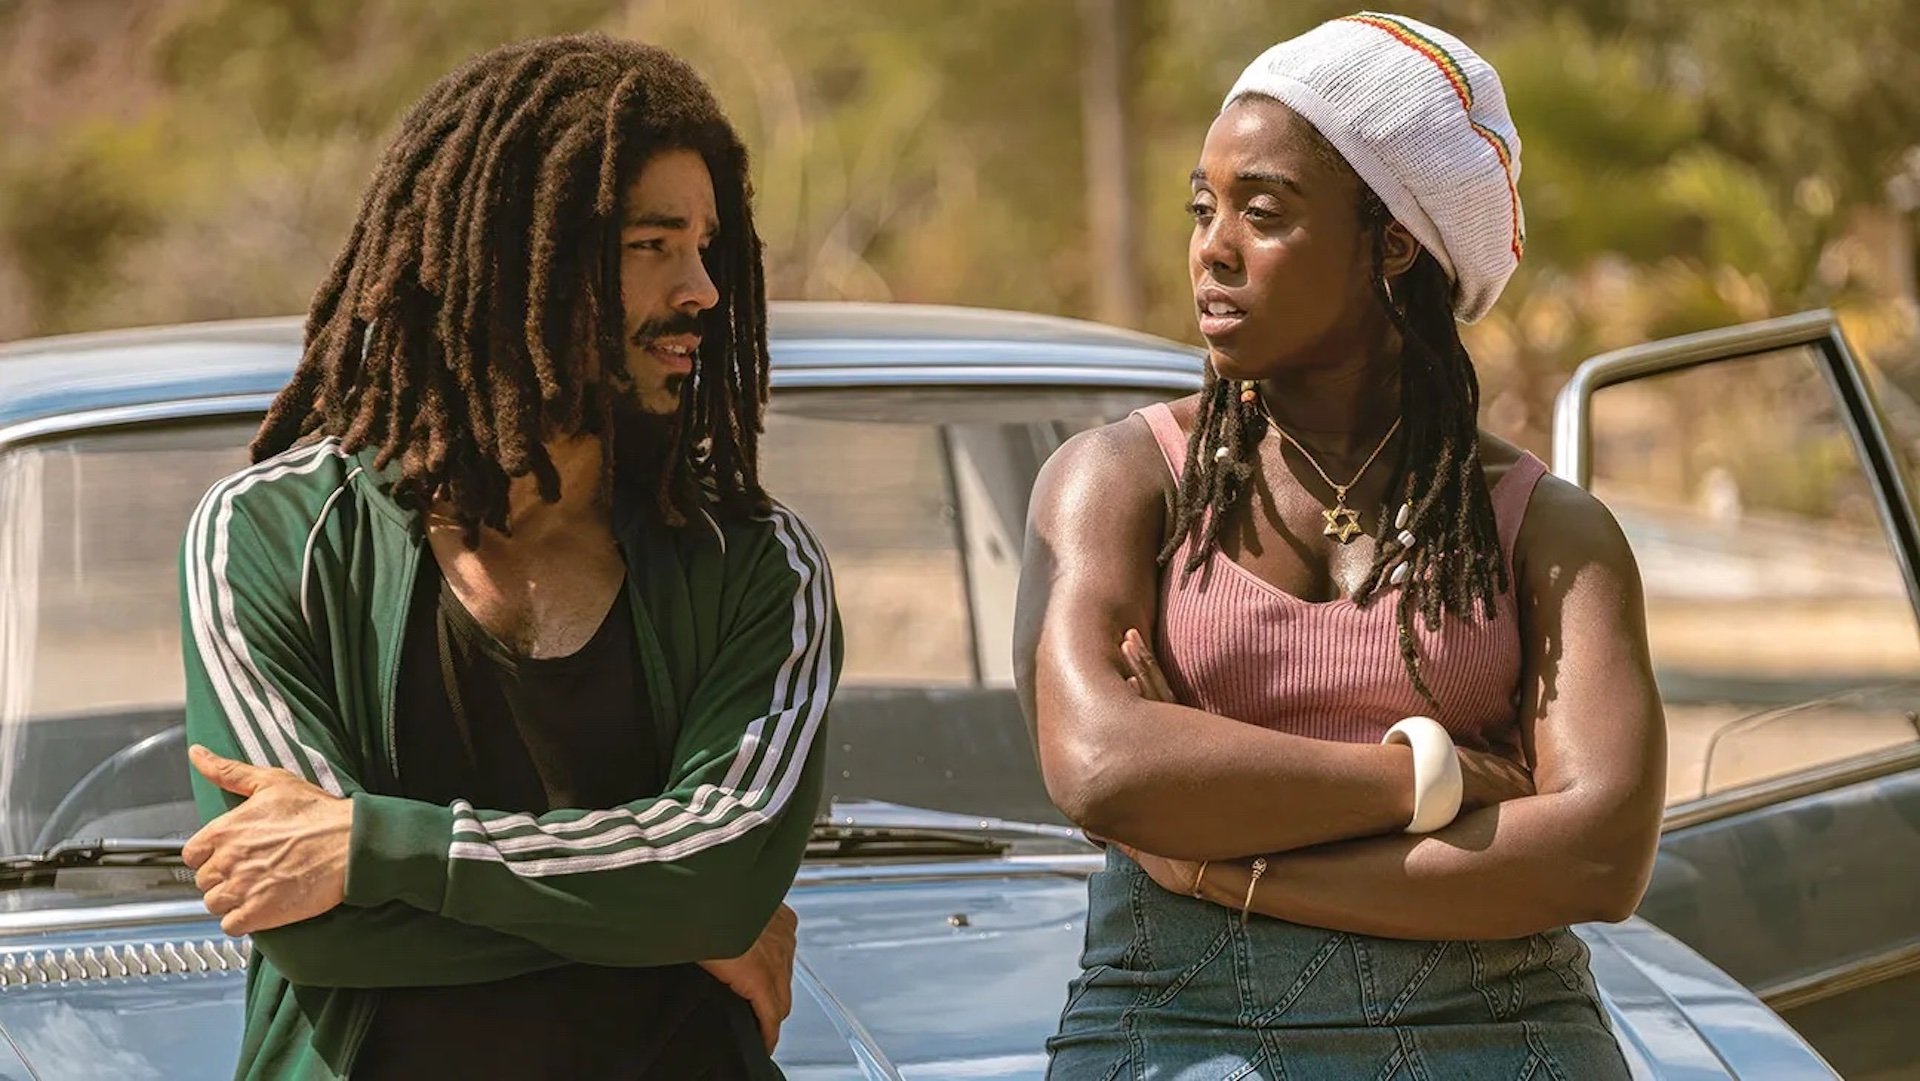 Bob Marley (Kingsley Ben-Adir) and Rita Marley (Lashana Lynch) talking on the hood of a car in 'Bob Marley: One Love'